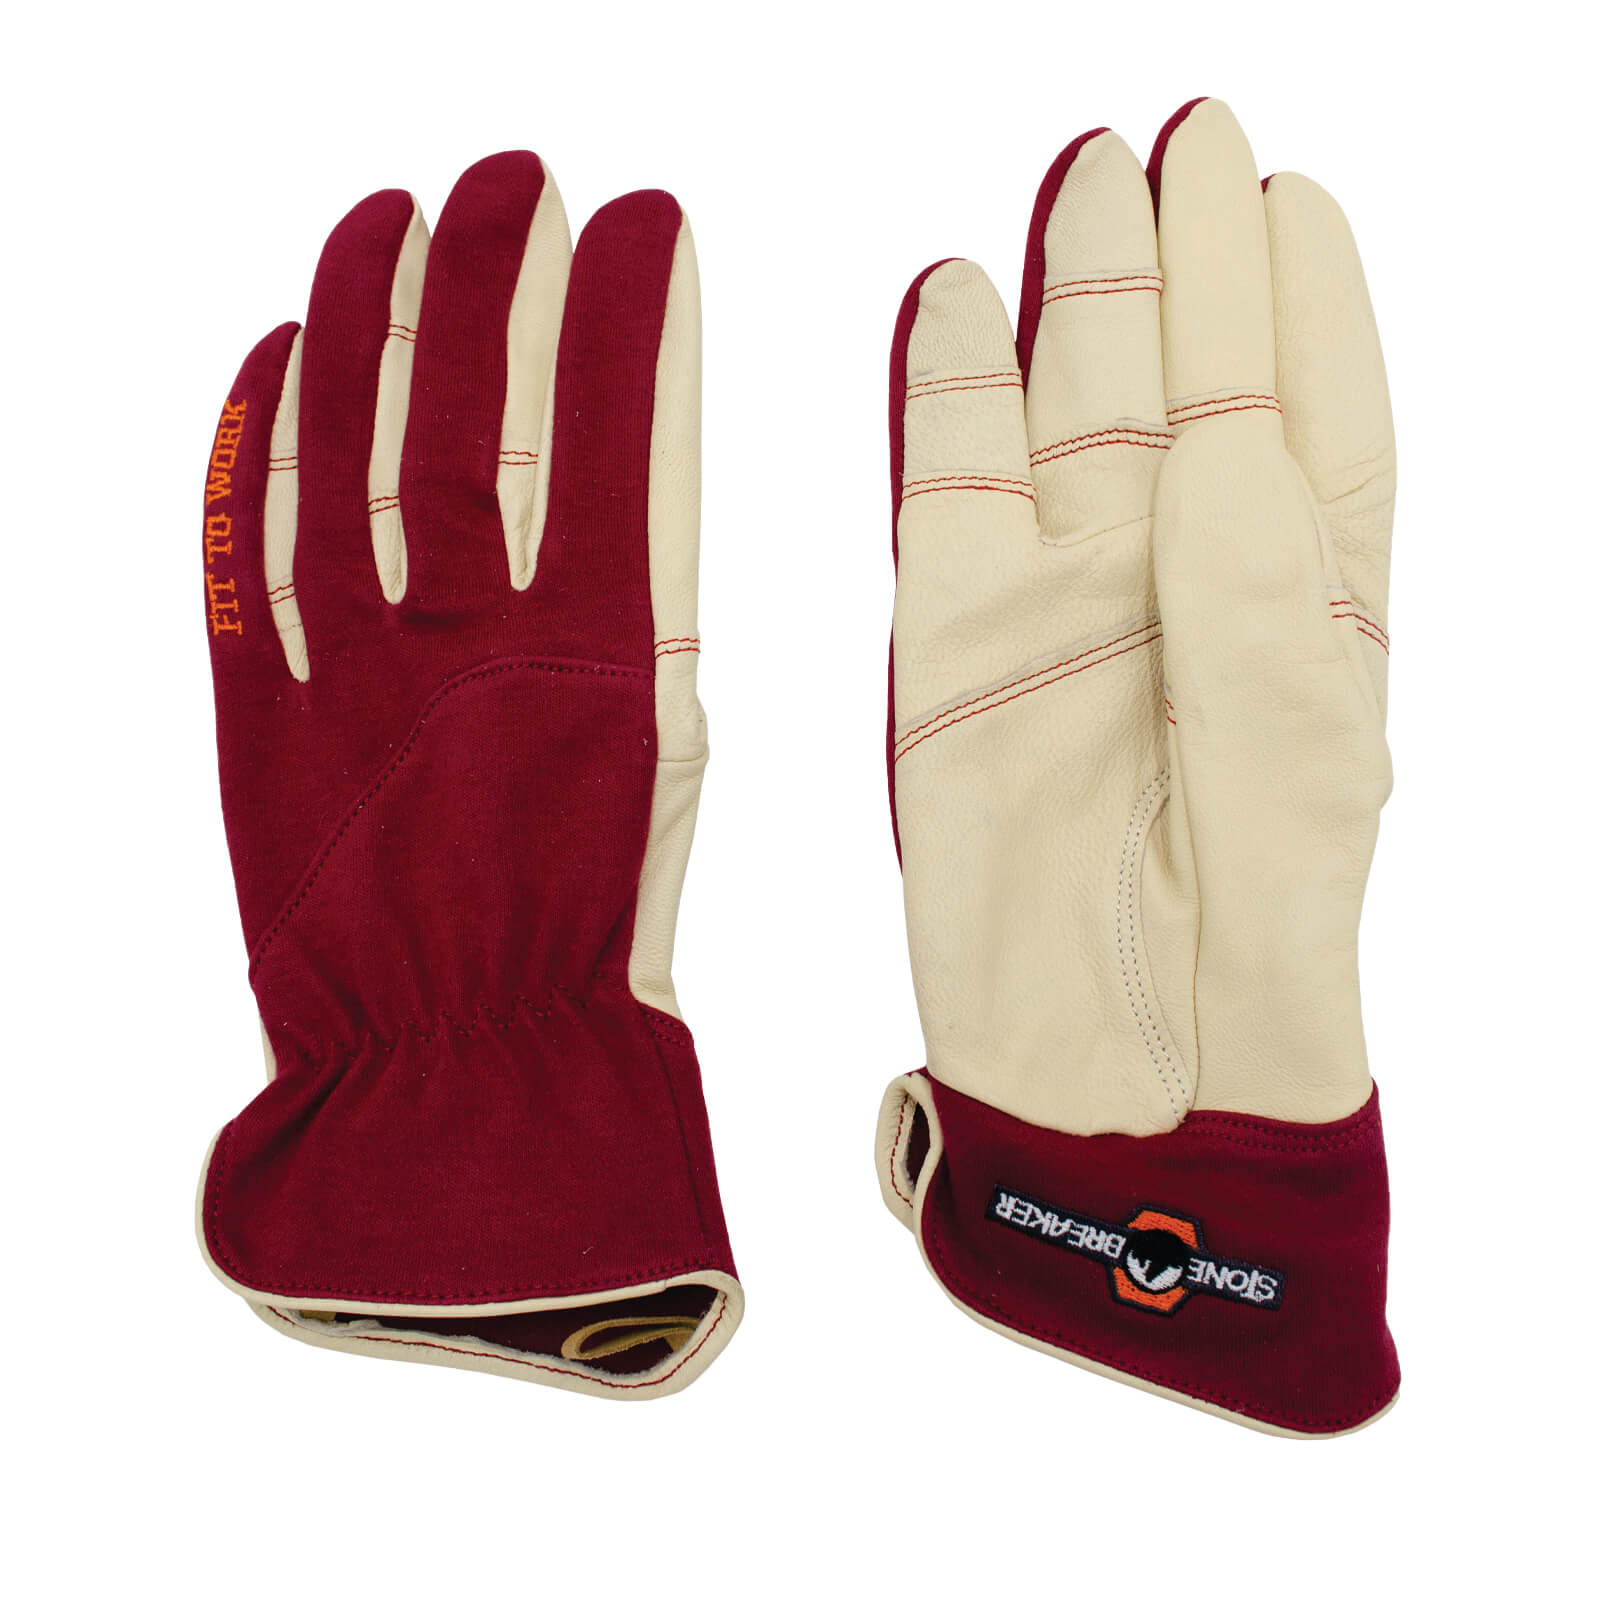 Stonebreaker Womens Everyday Work Gloves - Medium - Burgundy